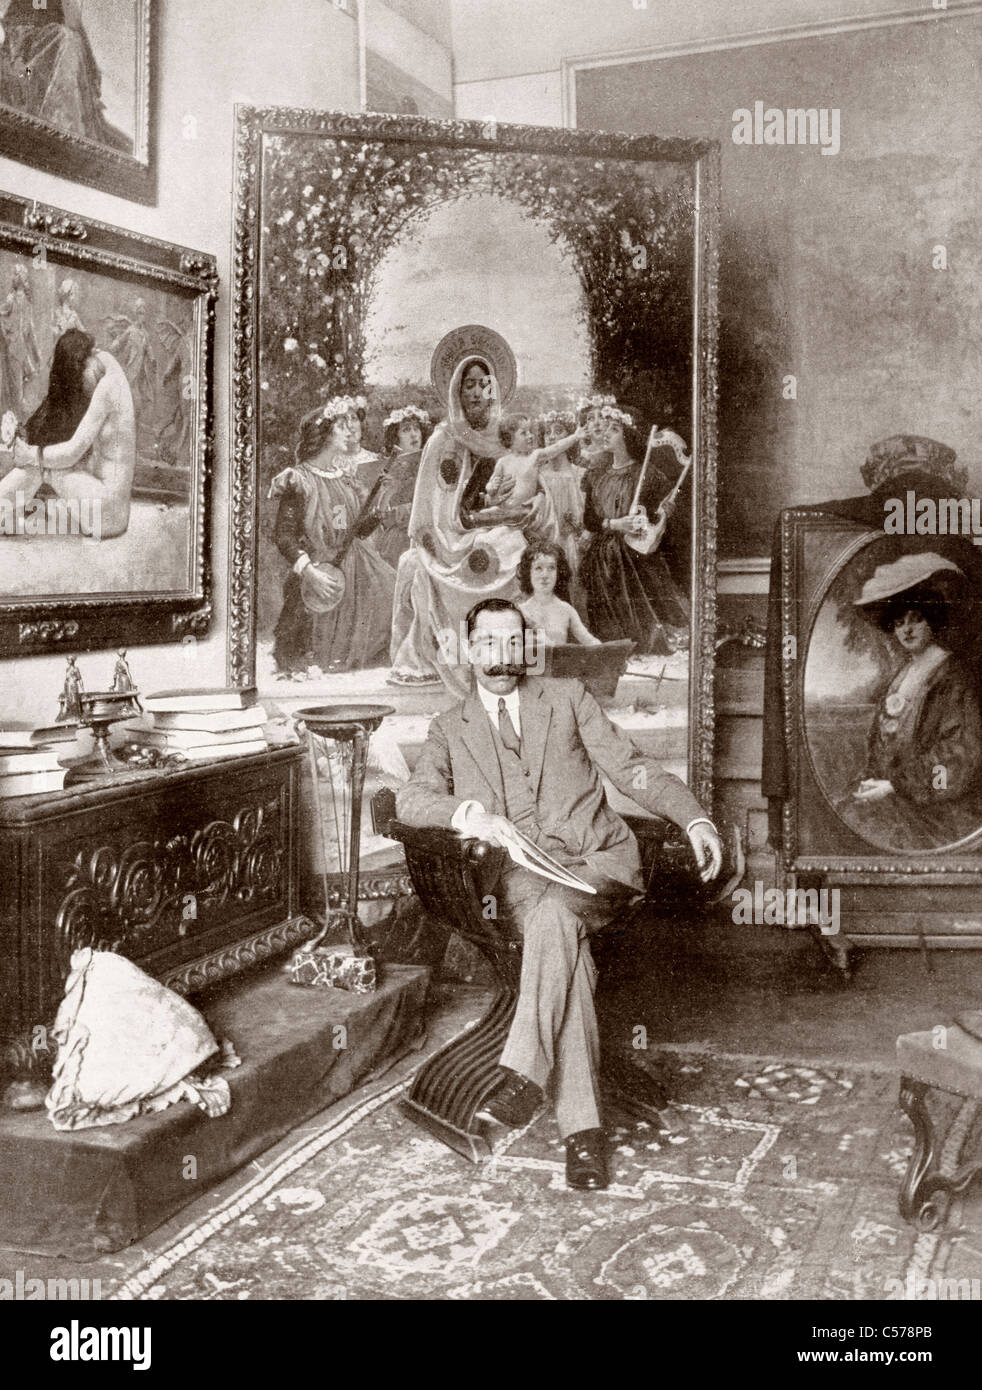 Pedro Sáenz Sáenz, 1863 - 1927. Pre-Raphaelite Brotherhood Spanish painter, here seen in his Malaga studio. Stock Photo